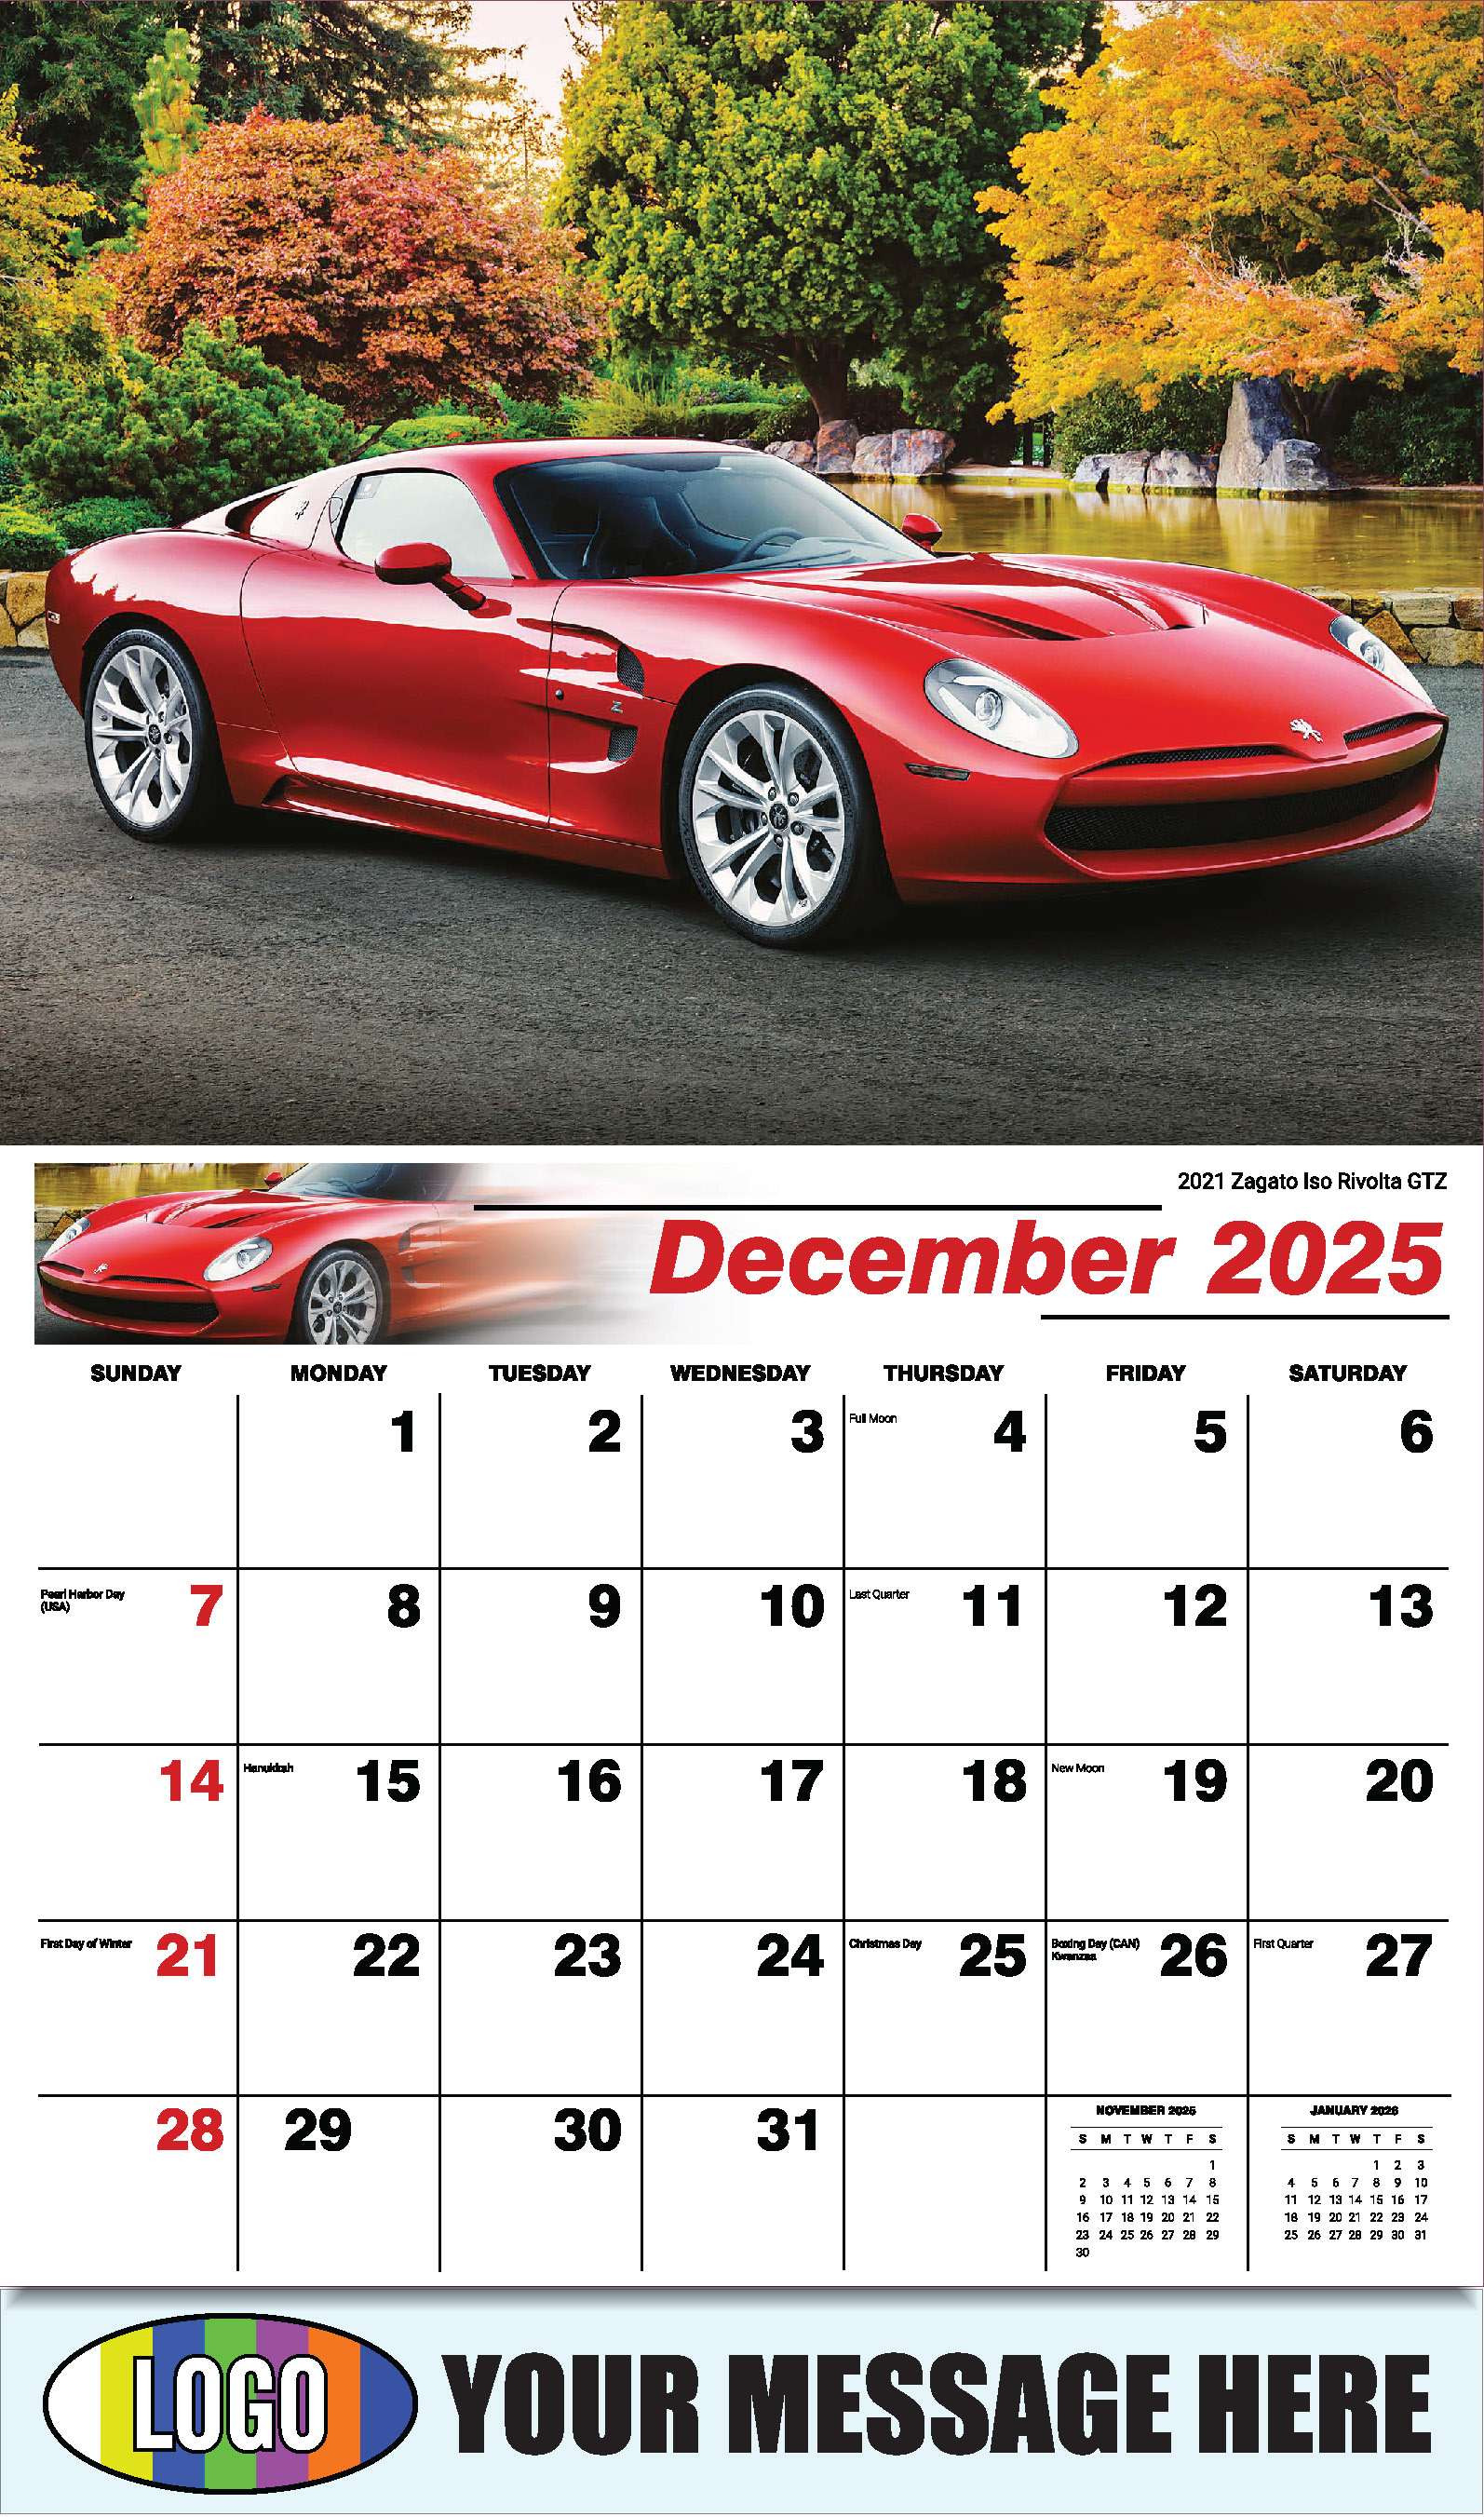 Exotic Cars 2025 Automotive Business Advertising Calendar - December